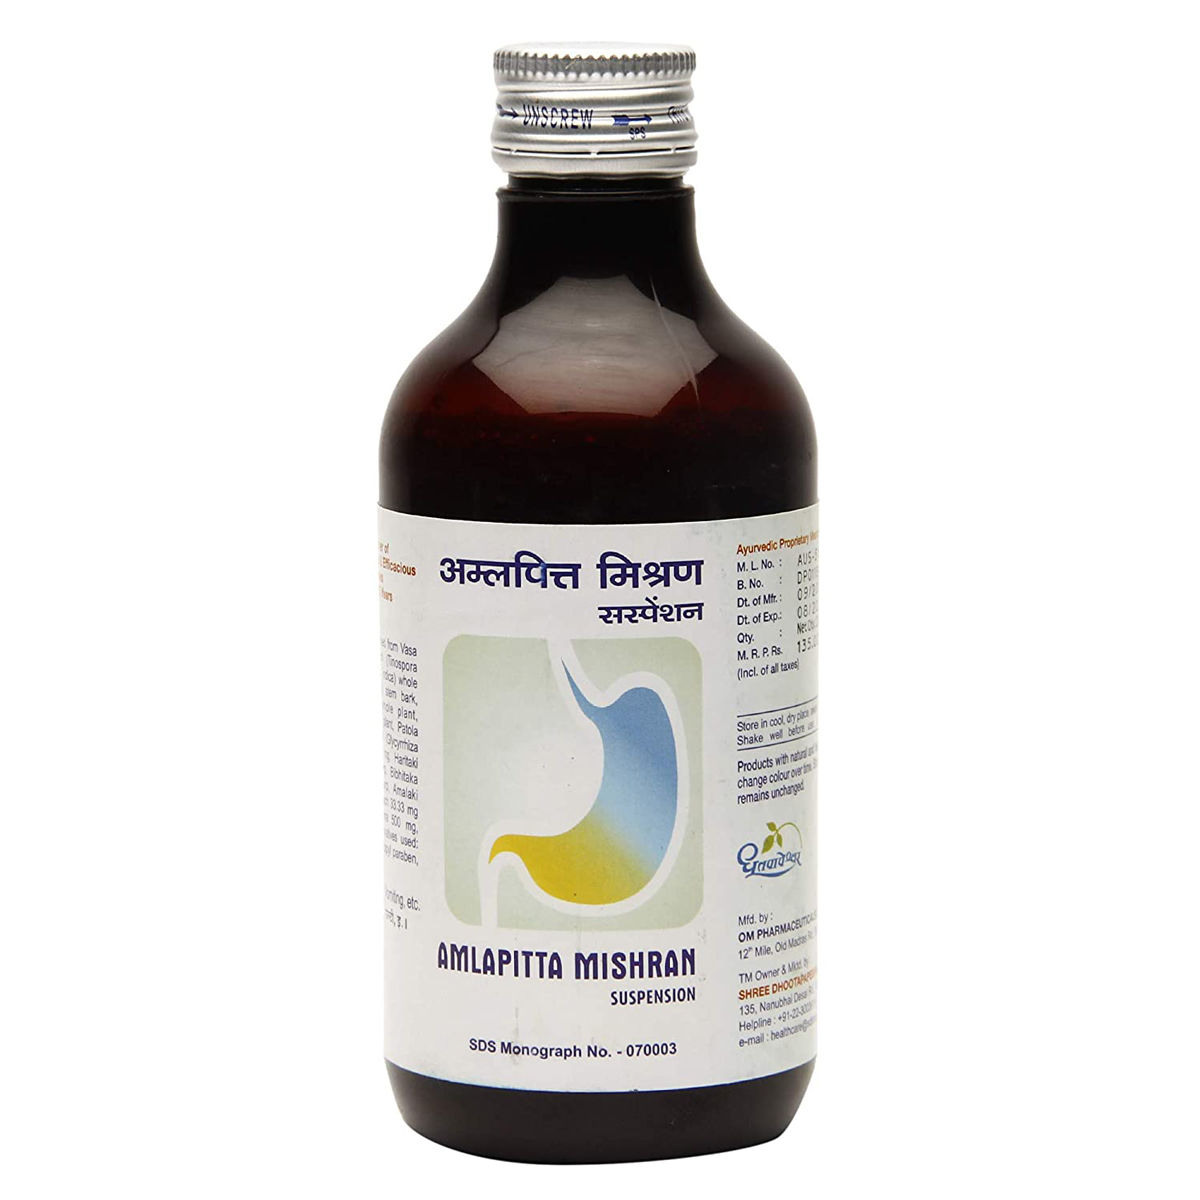 Dhootapapeshwar Amlapitta Mishran Suspension, 450 ml, Pack of 1 